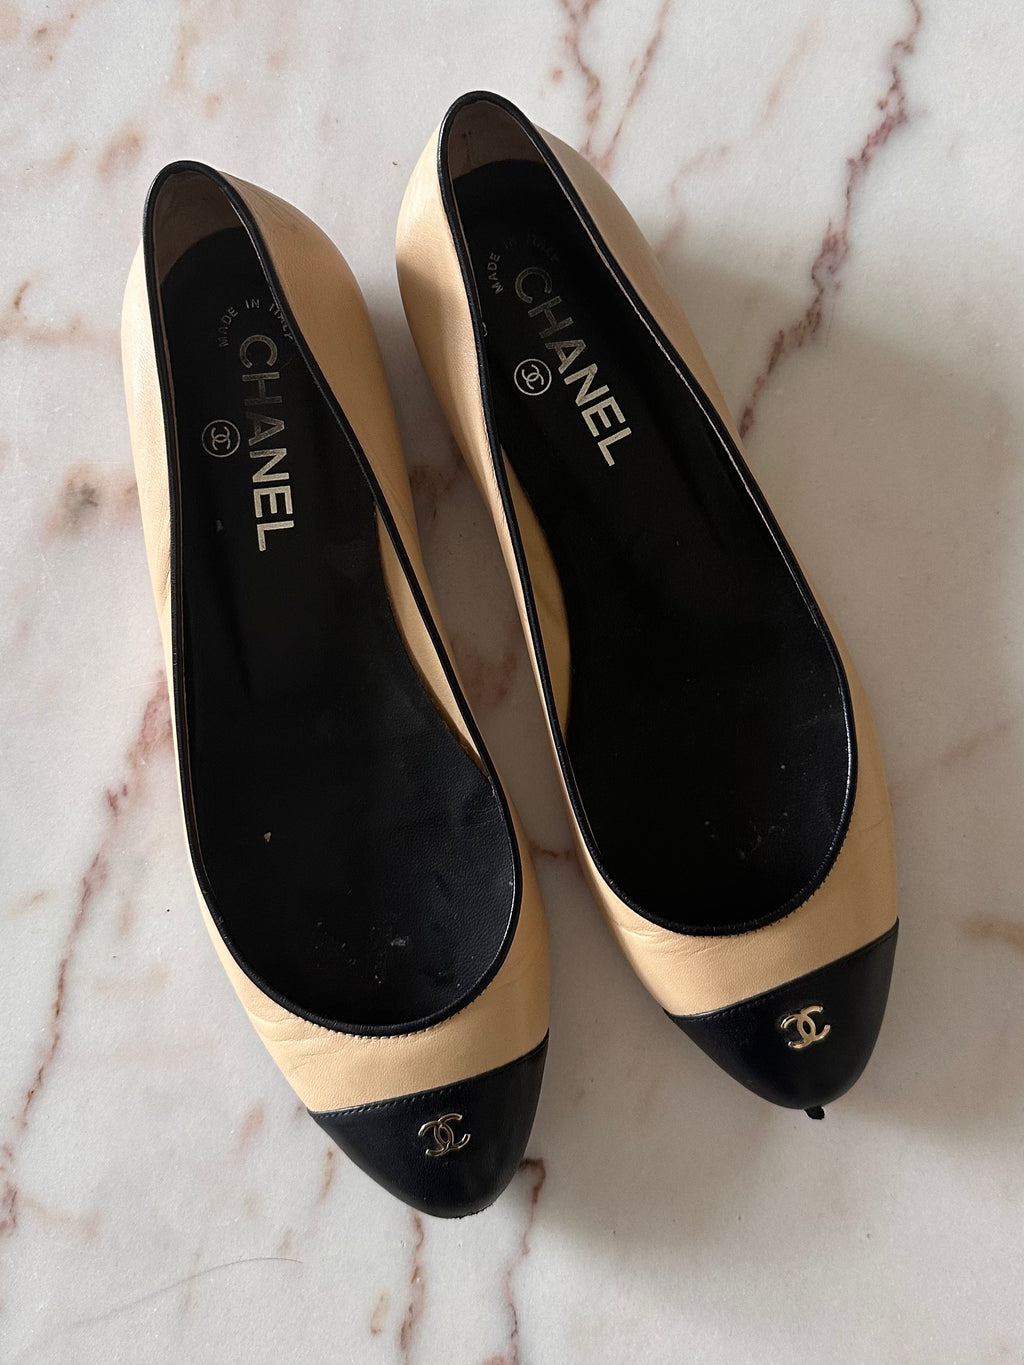 Chanel Ballet Flats (size 37.5)